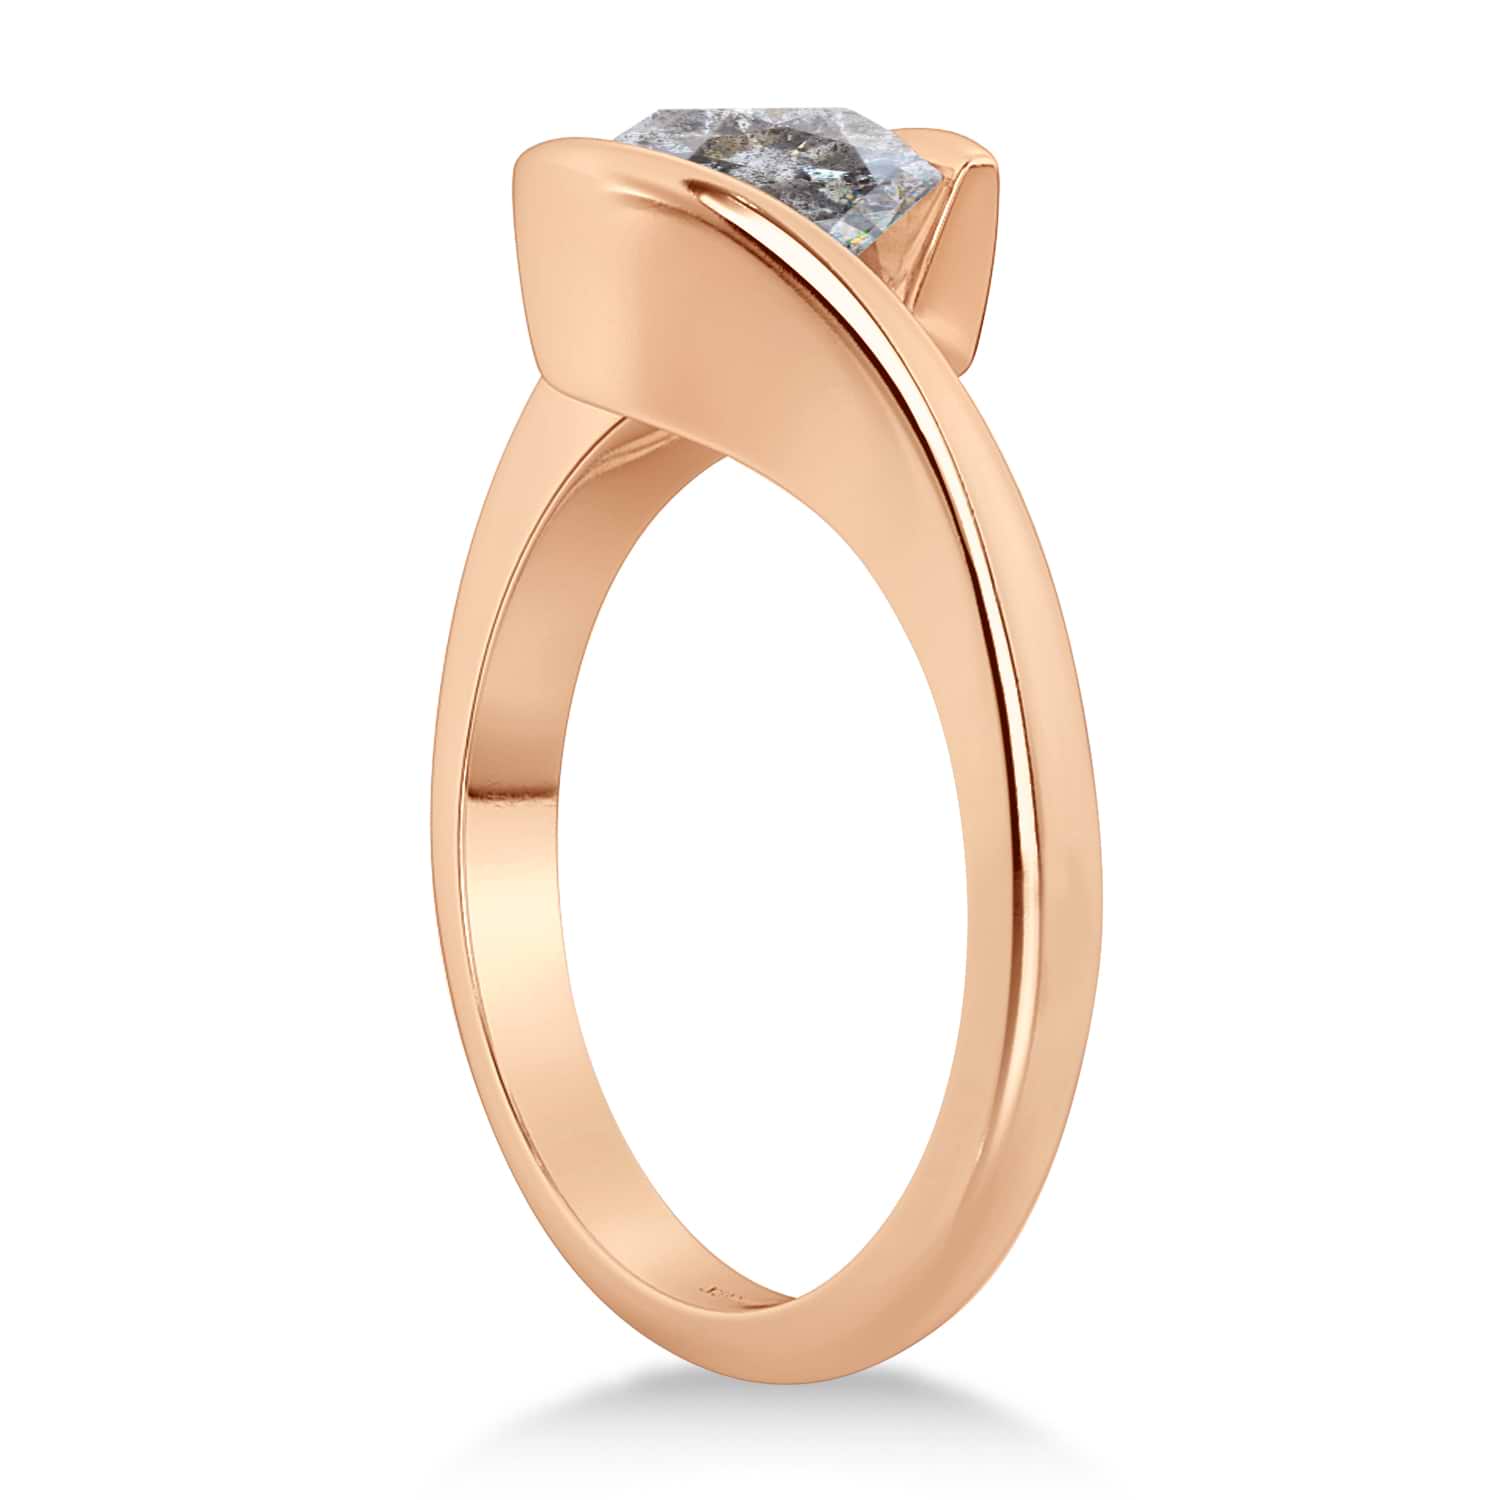 Tension Set Solitaire Salt & Pepper Diamond Engagement Ring 14k Rose Gold  1.25ct - AZ10505